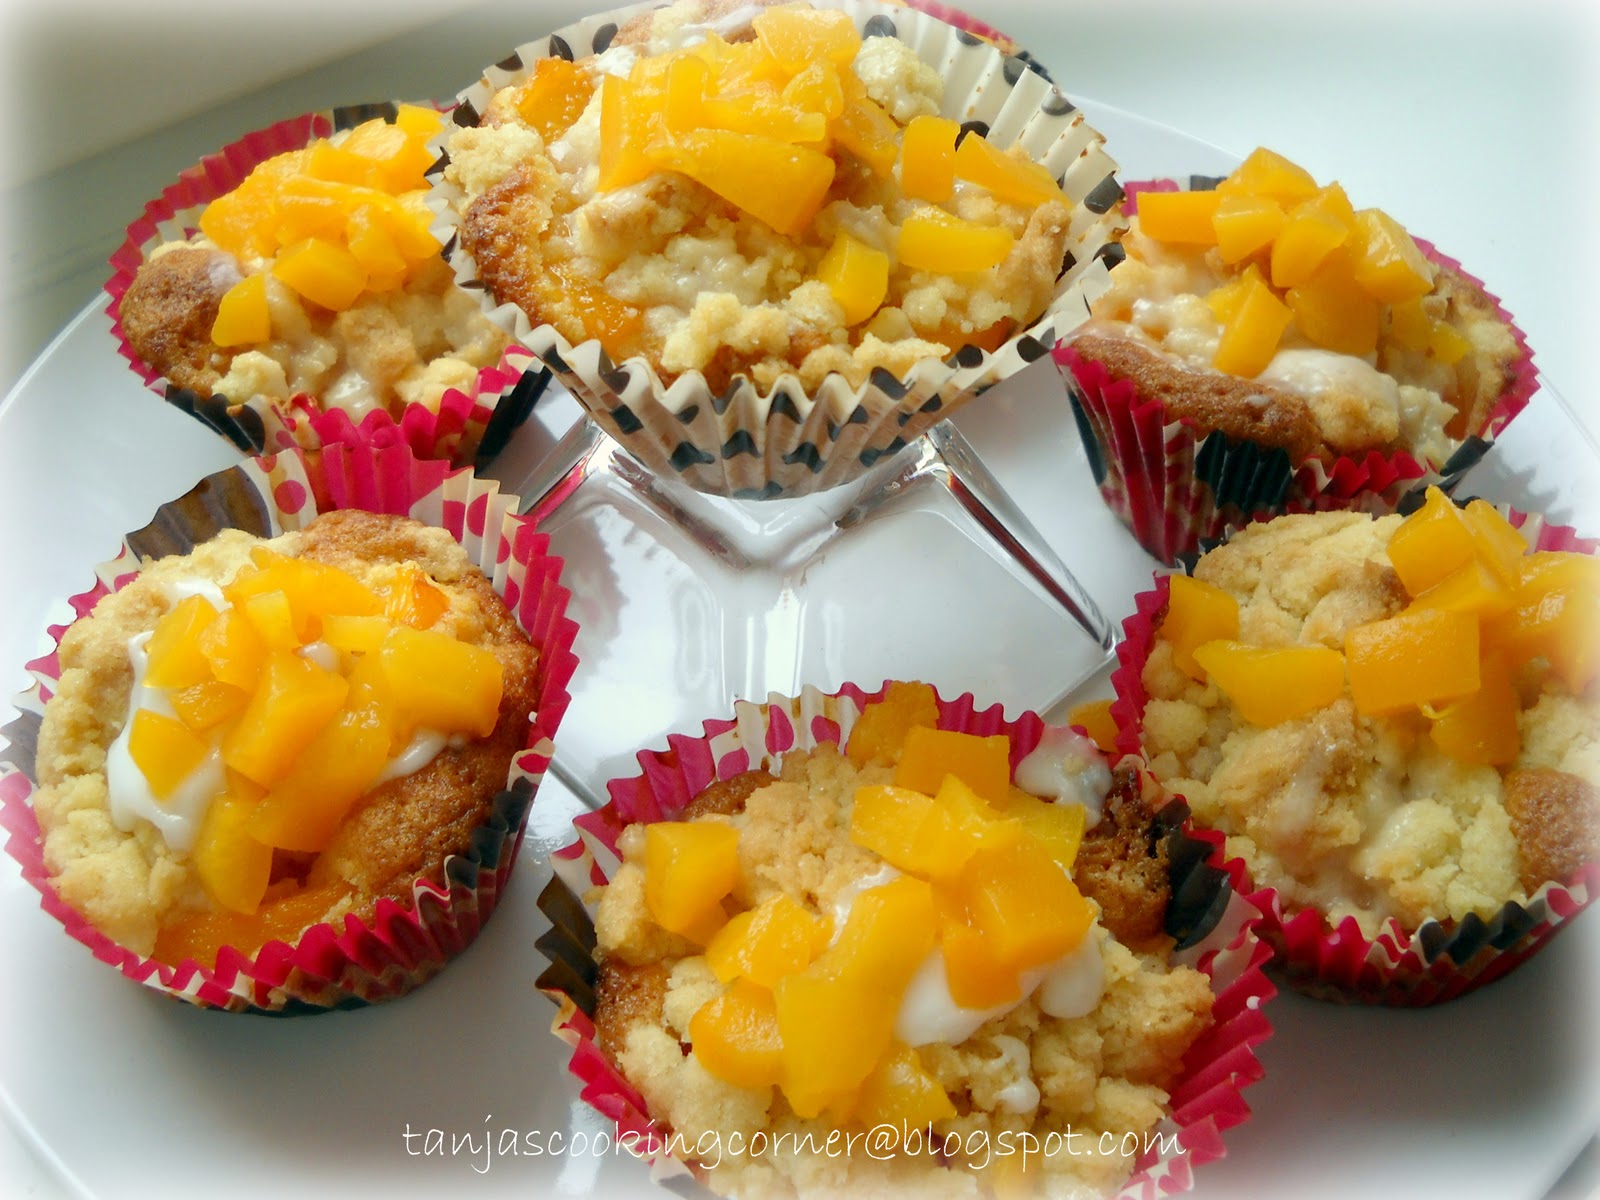 Tanjas Cooking Corner: Pfirsich-Muffins mit Streusel/ Muffini od ...